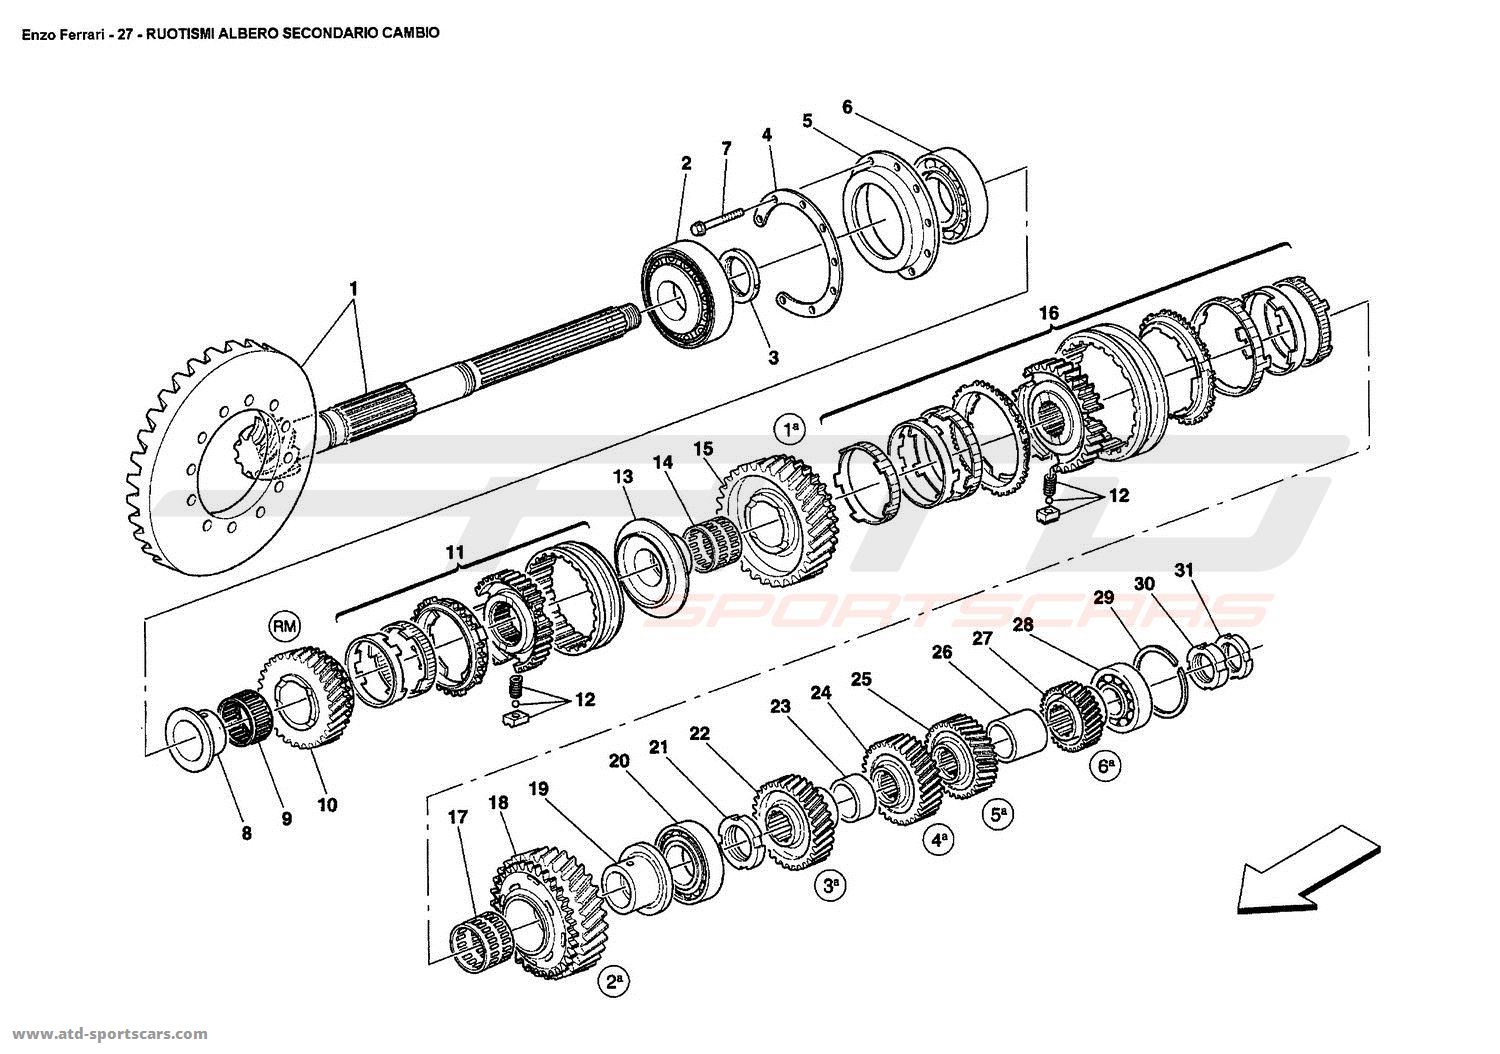 Ferrari Enzo SECONDARY SHAFT GEARS parts at ATD-Sportscars | ATD-Sportscars